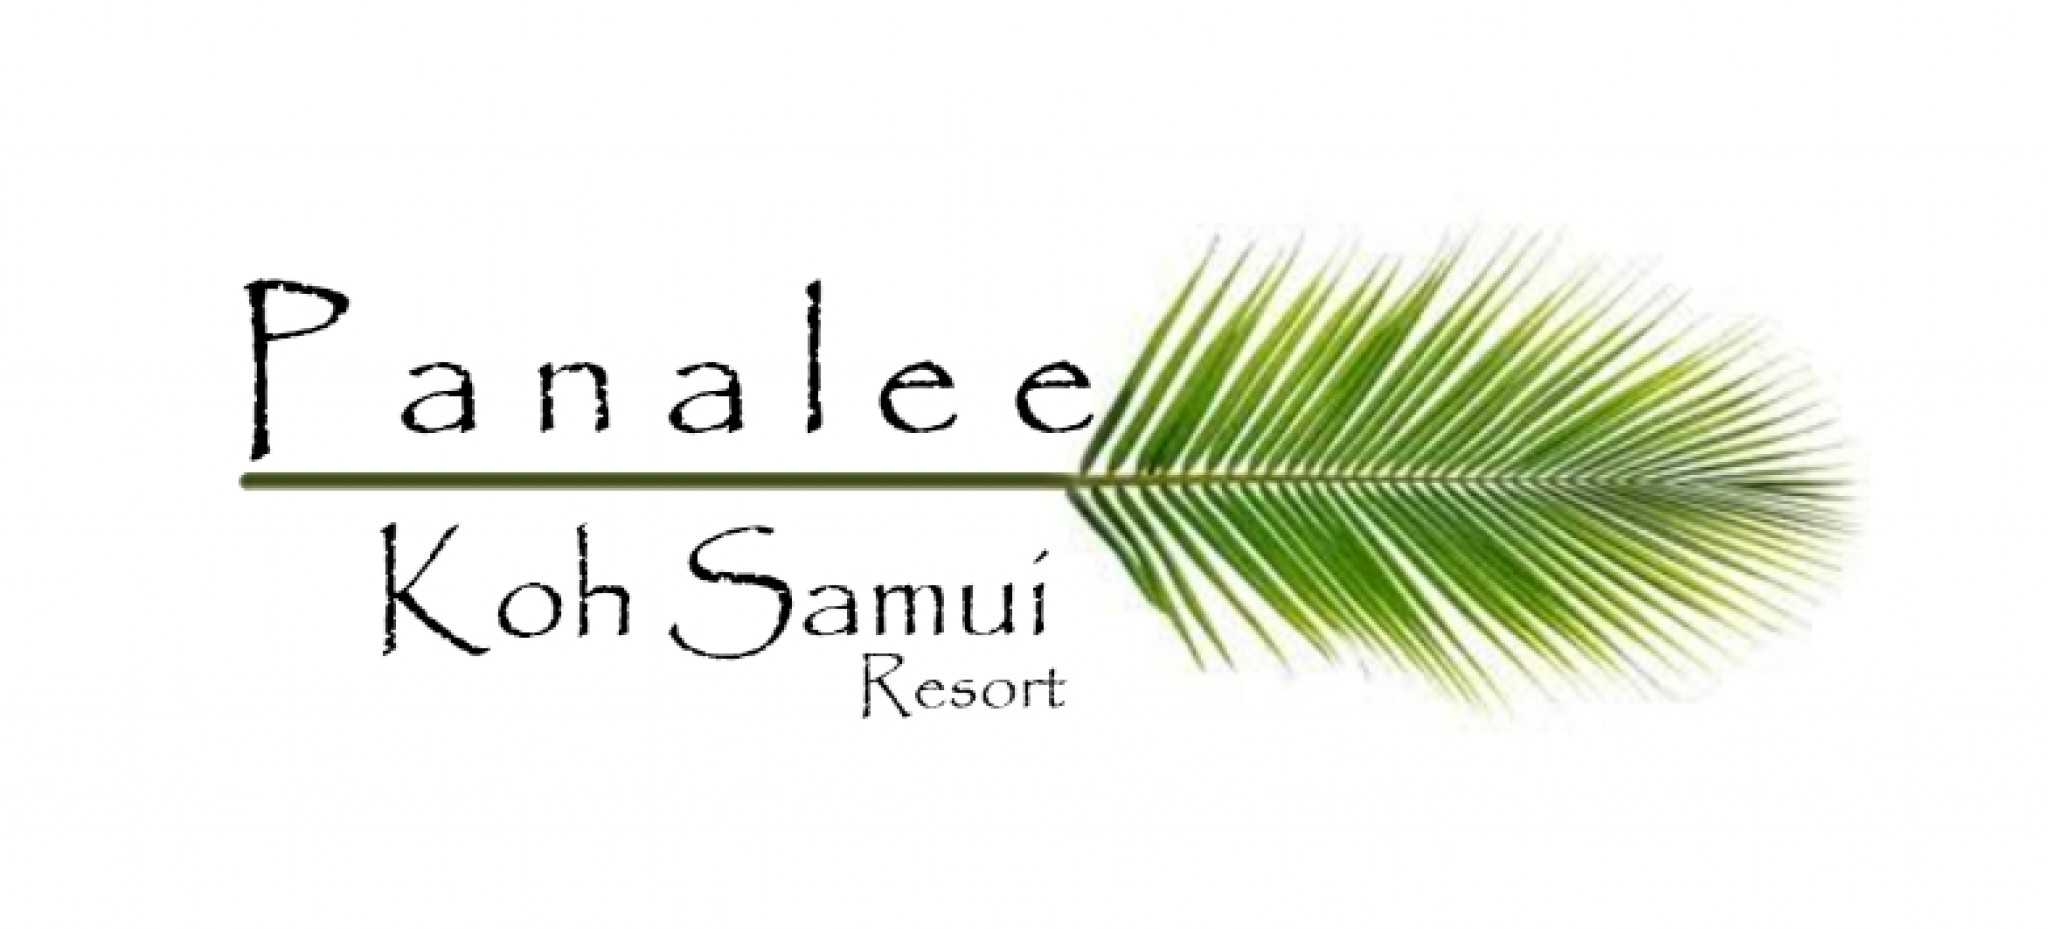 Panalee Koh Samui Resort